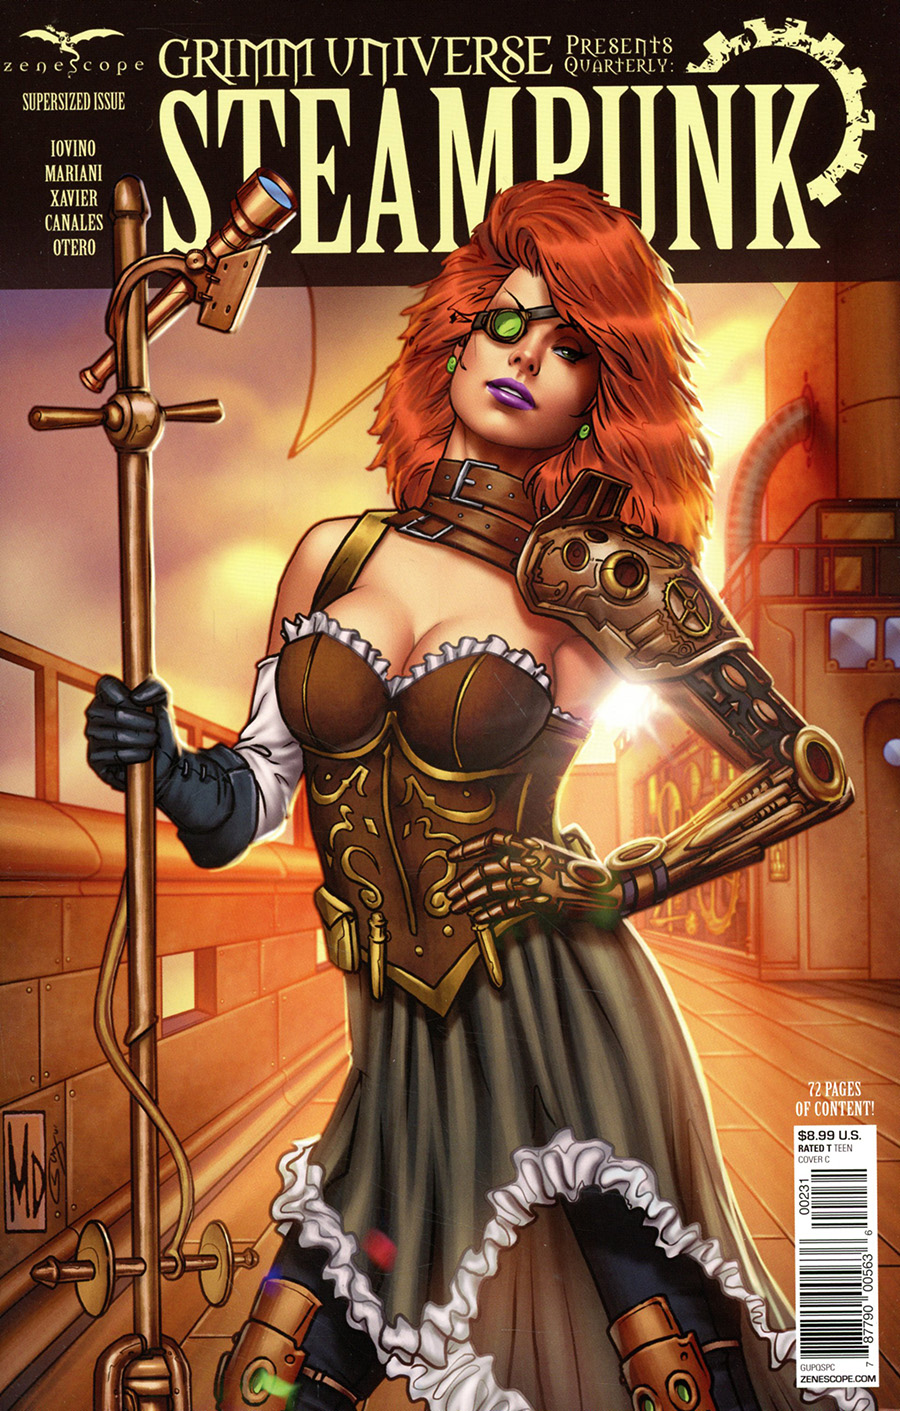 Grimm Fairy Tales Presents Grimm Universe Quarterly #2 Steampunk Cover C Michael DiPascale